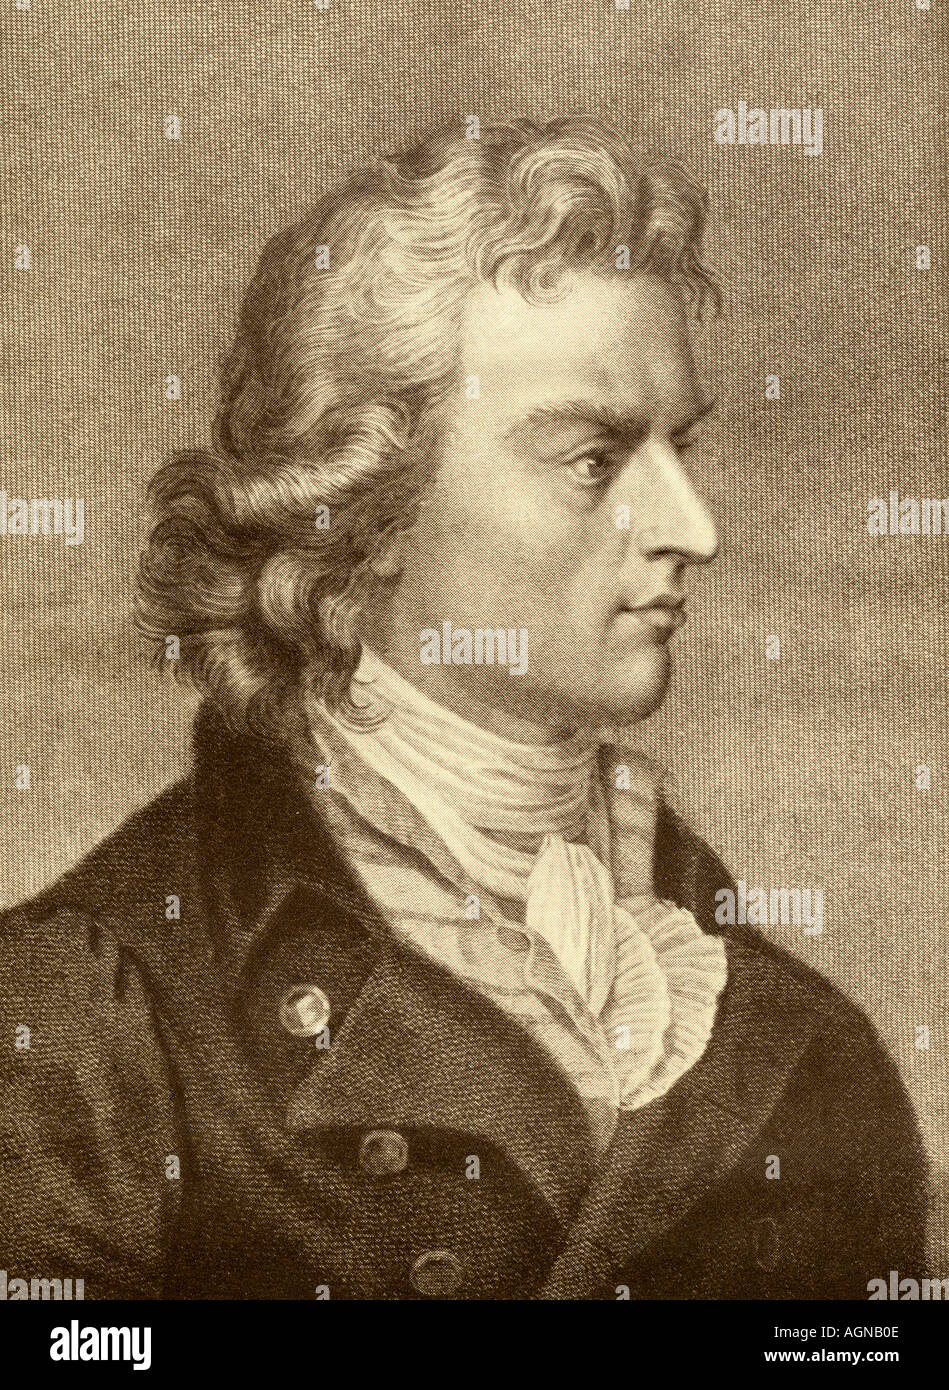 Johann Christoph Friedrich Von Schiller, 1759 - 1805.  German poet, philosopher, physician, historian, and playwright. Stock Photo